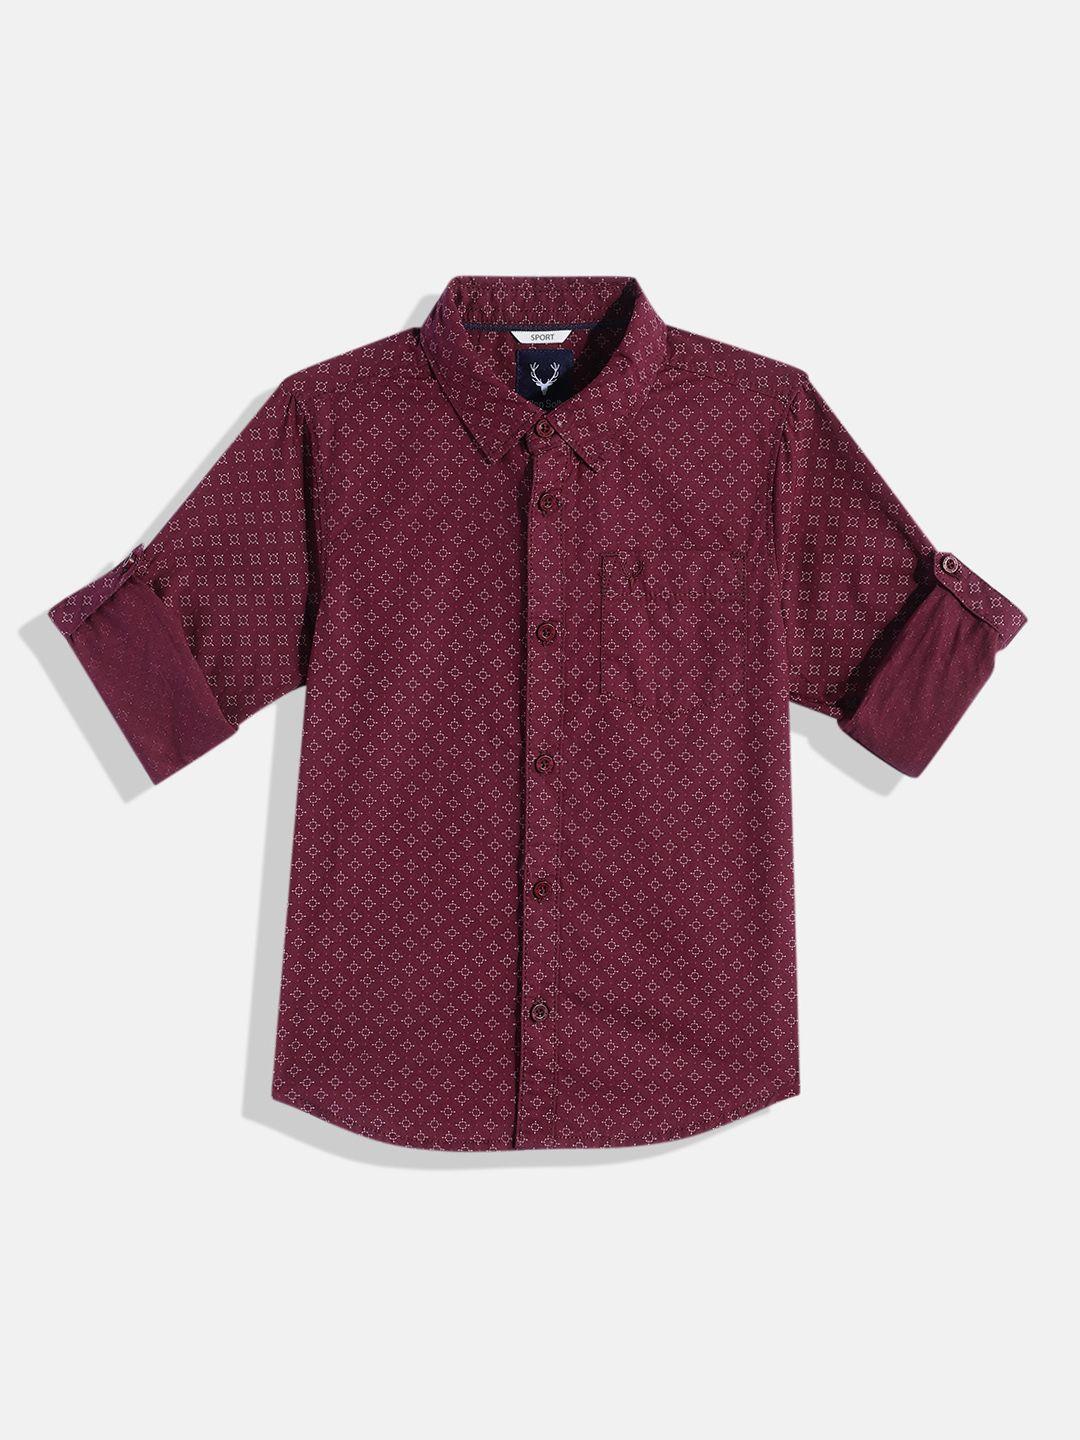 allen solly junior boys classic printed pure cotton casual shirt